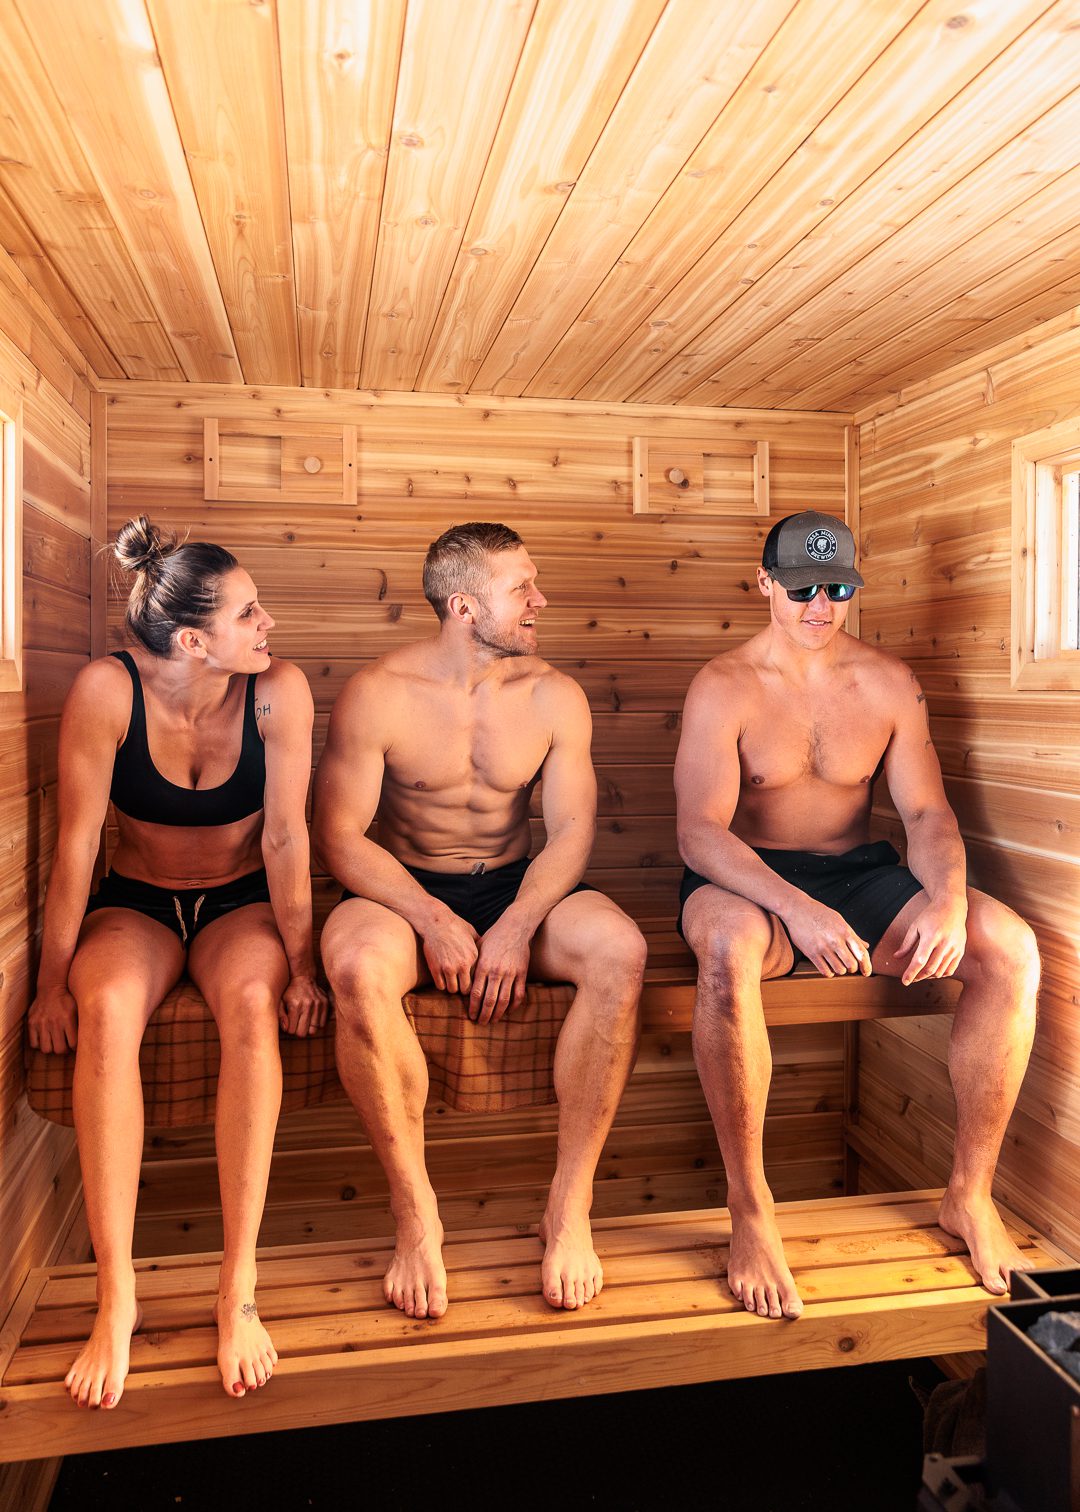 Sitting on the sauna bench in Minnesota inside a rental sauna during winter.